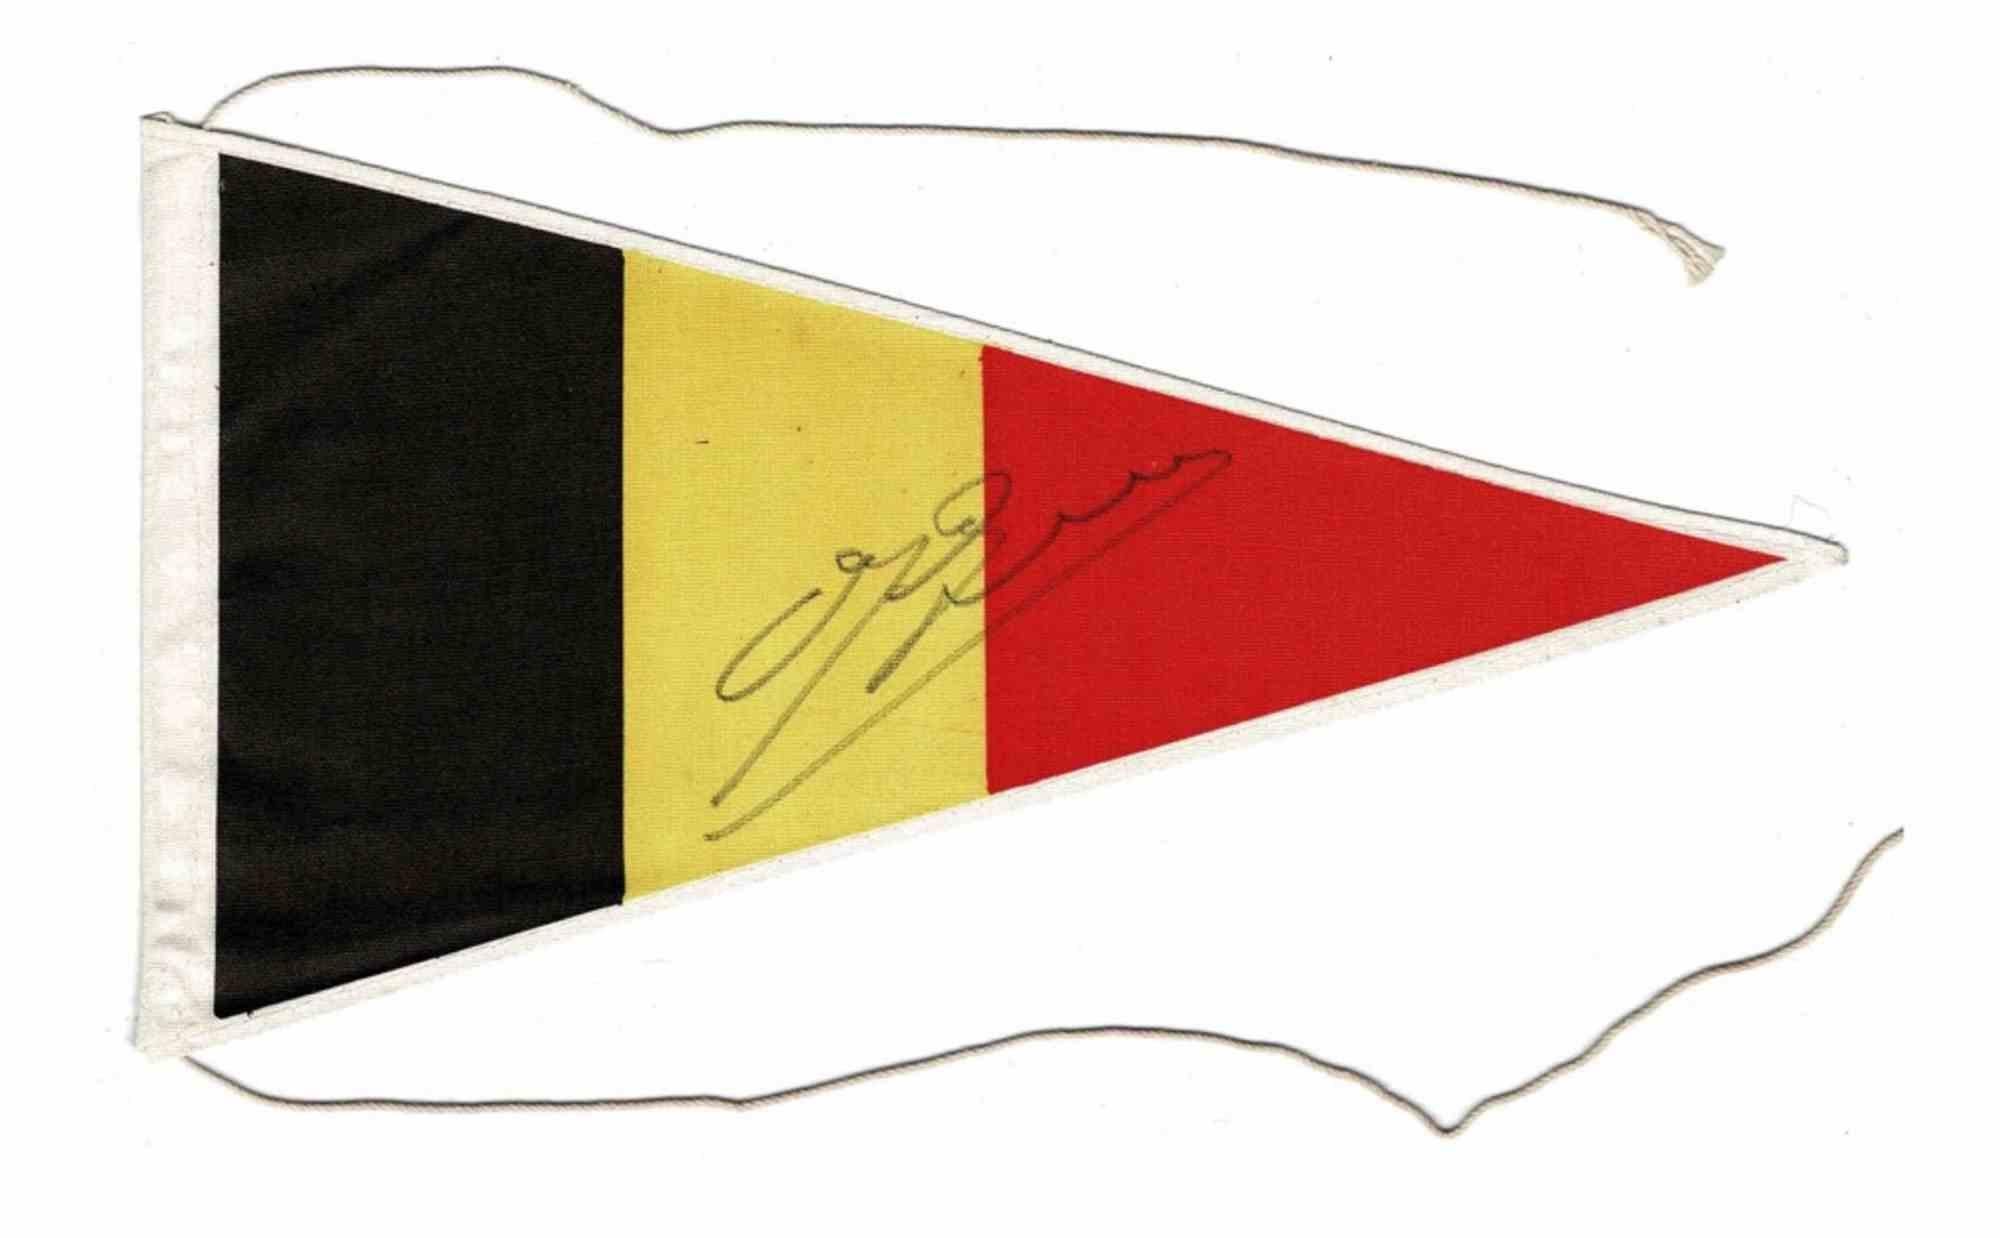 Belgian Pennant Autographed by Gaston Eyskens - 1970 - Art by Unknown